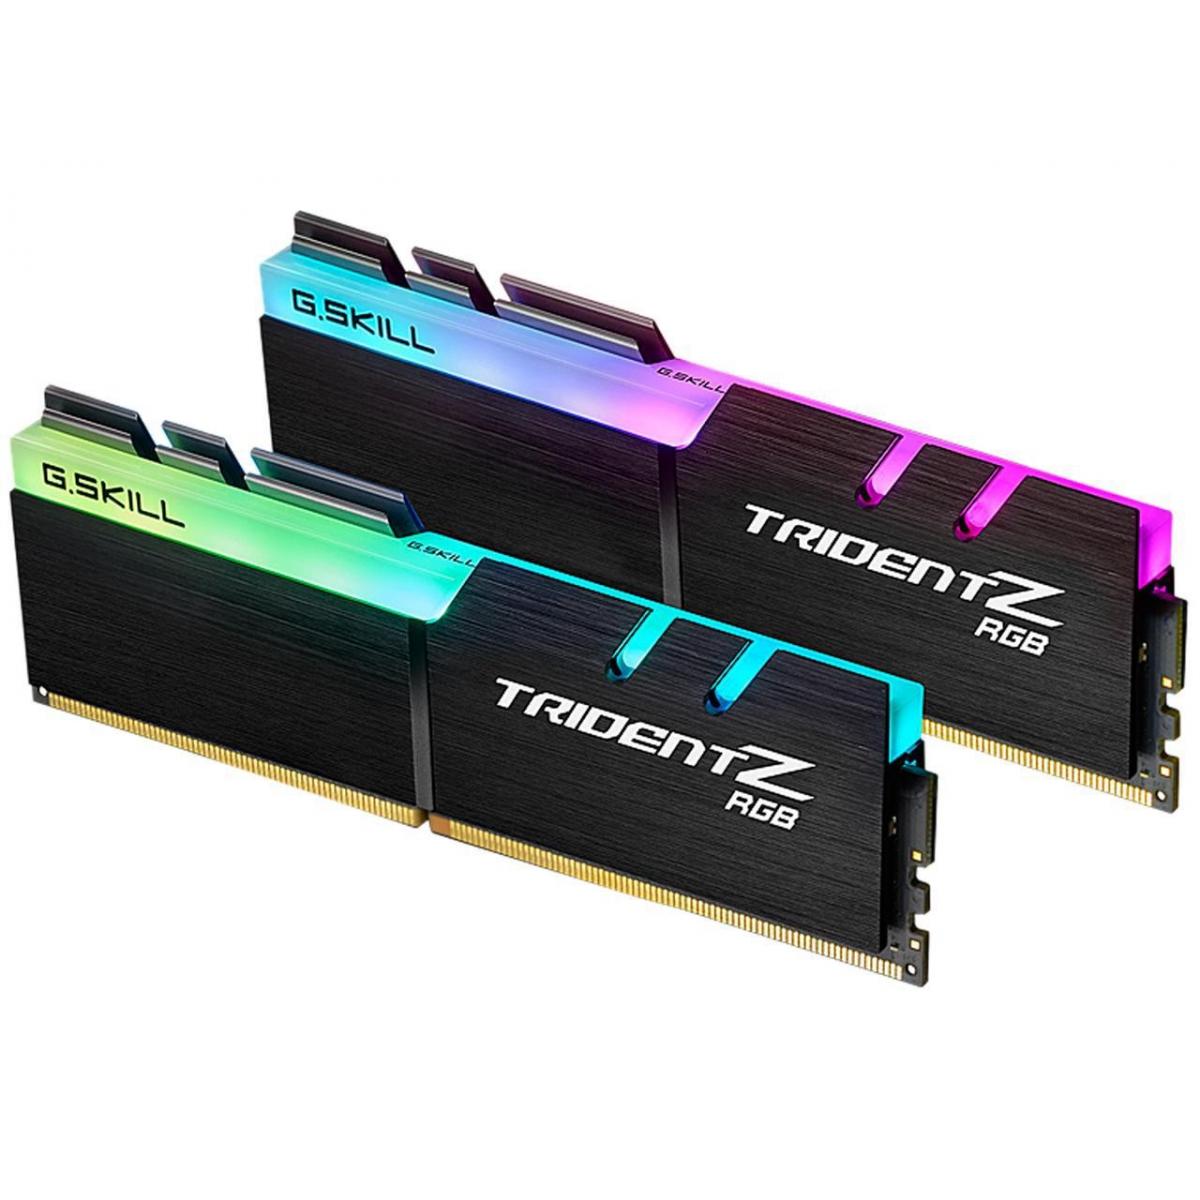 G.SKILL TridentZ RGB 16GB (2 x 8GB) DDR4 3000 Mhz